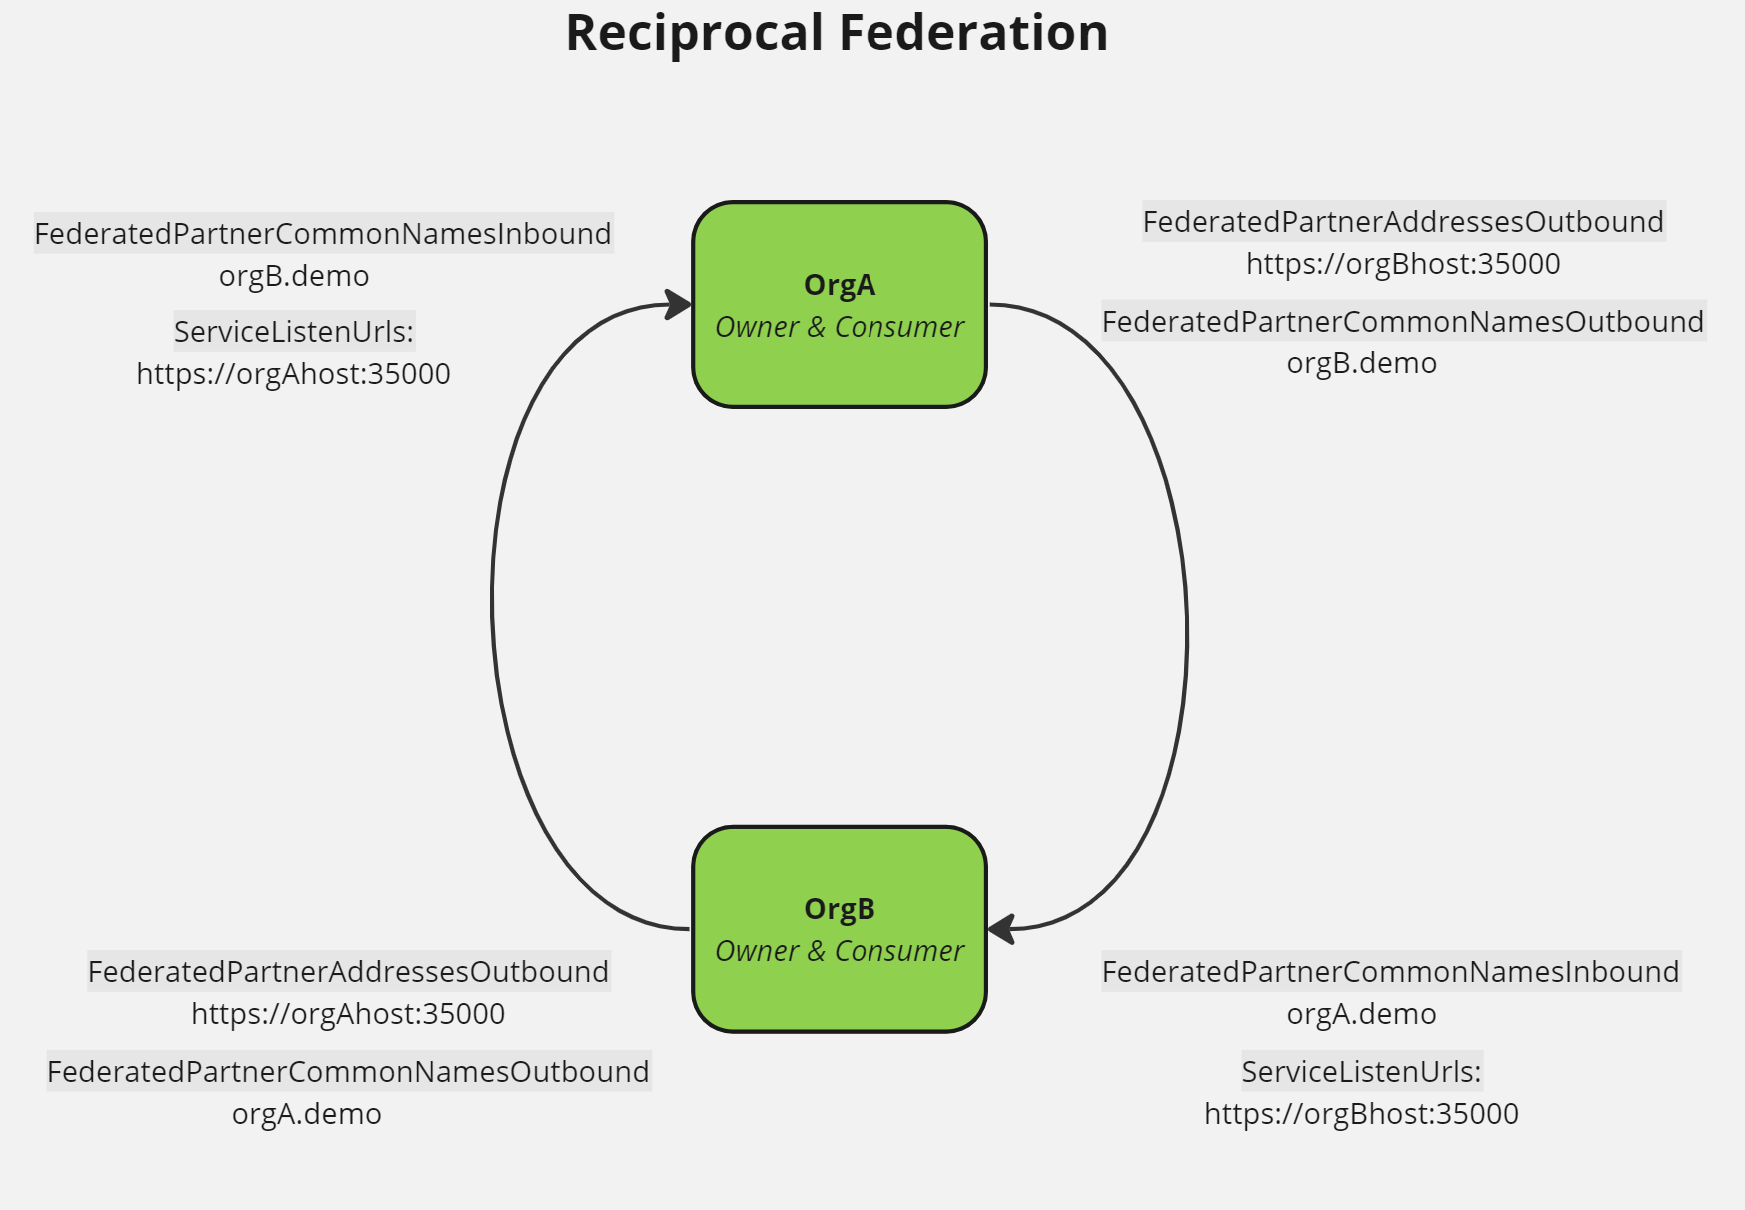 MCE Federation Configuration- Reciprocal Federation